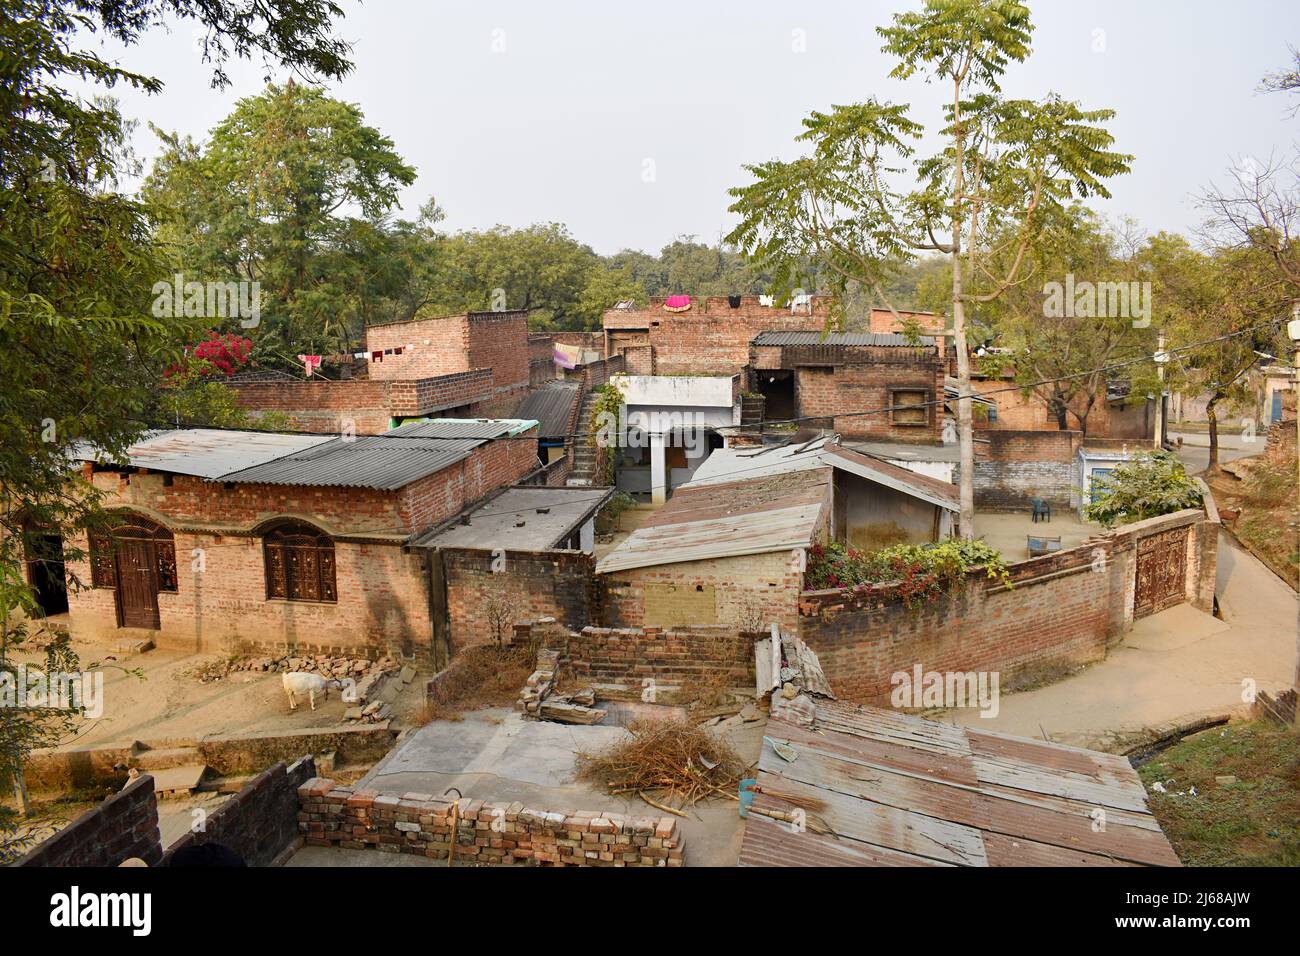 Village indien rural, vue de dessus, village de Barabanki, Uttar Pradesh, Inde Banque D'Images